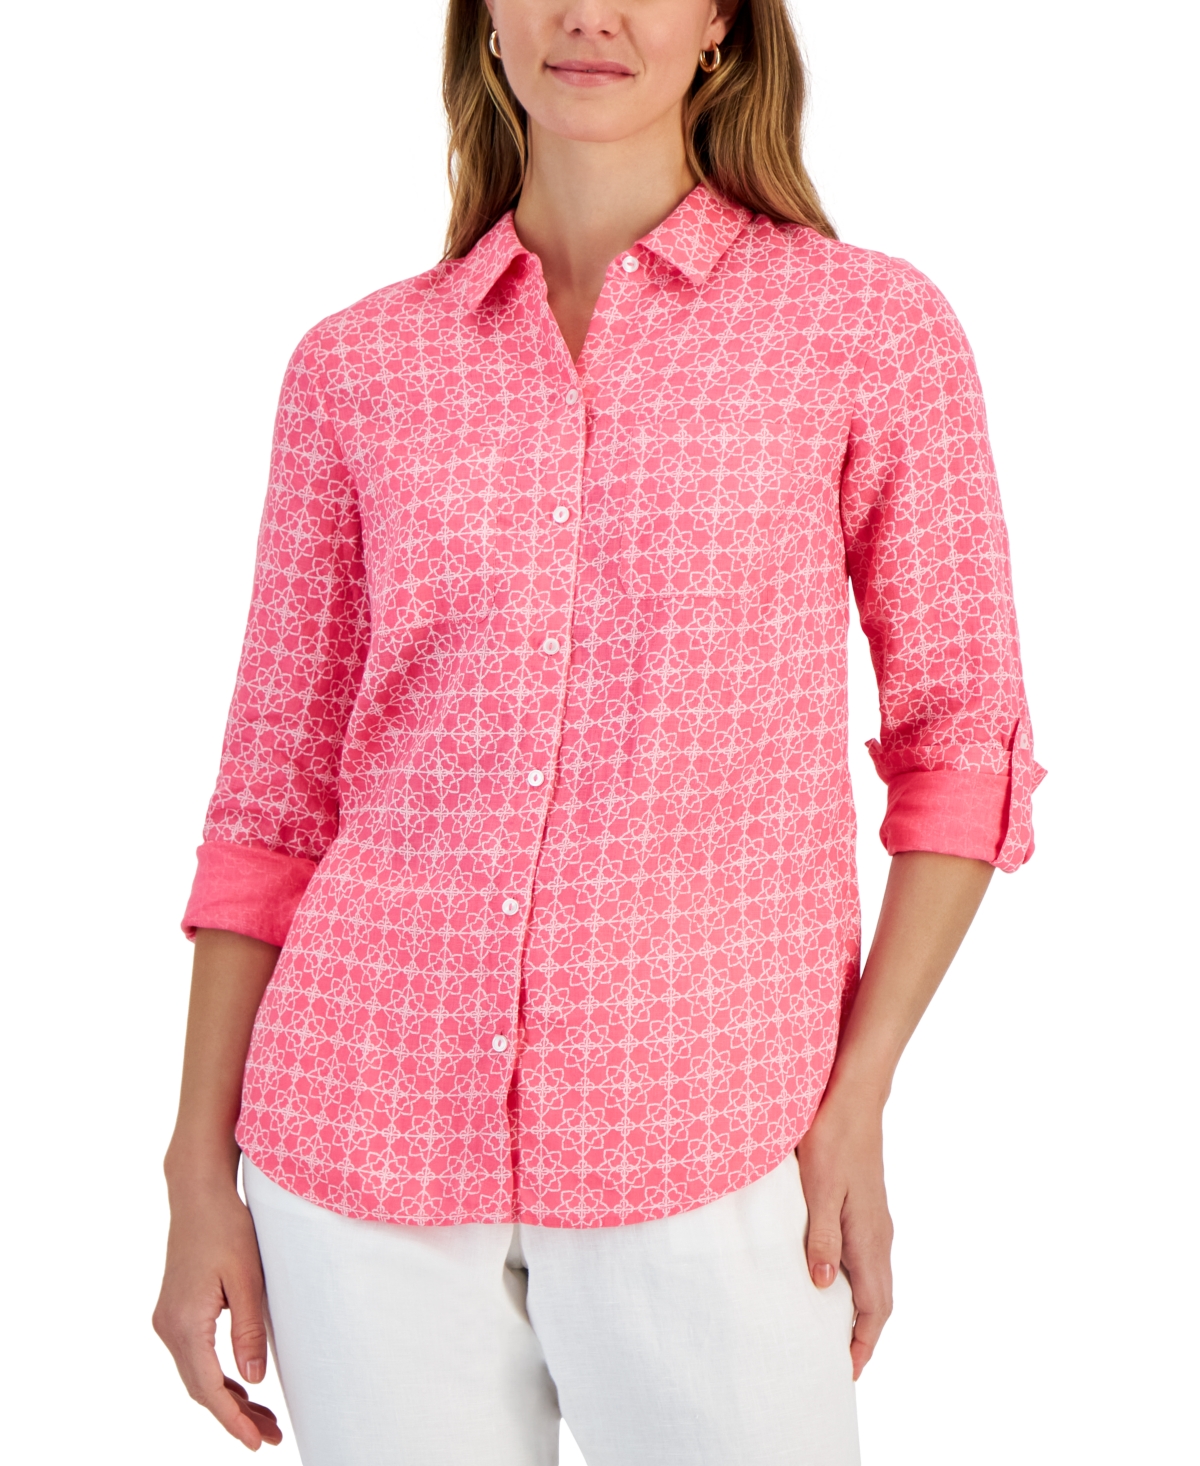 Women's 100% Linen Geo-Print Roll-Tab Shirt, Created for Macy's - Foxy Pink Combo